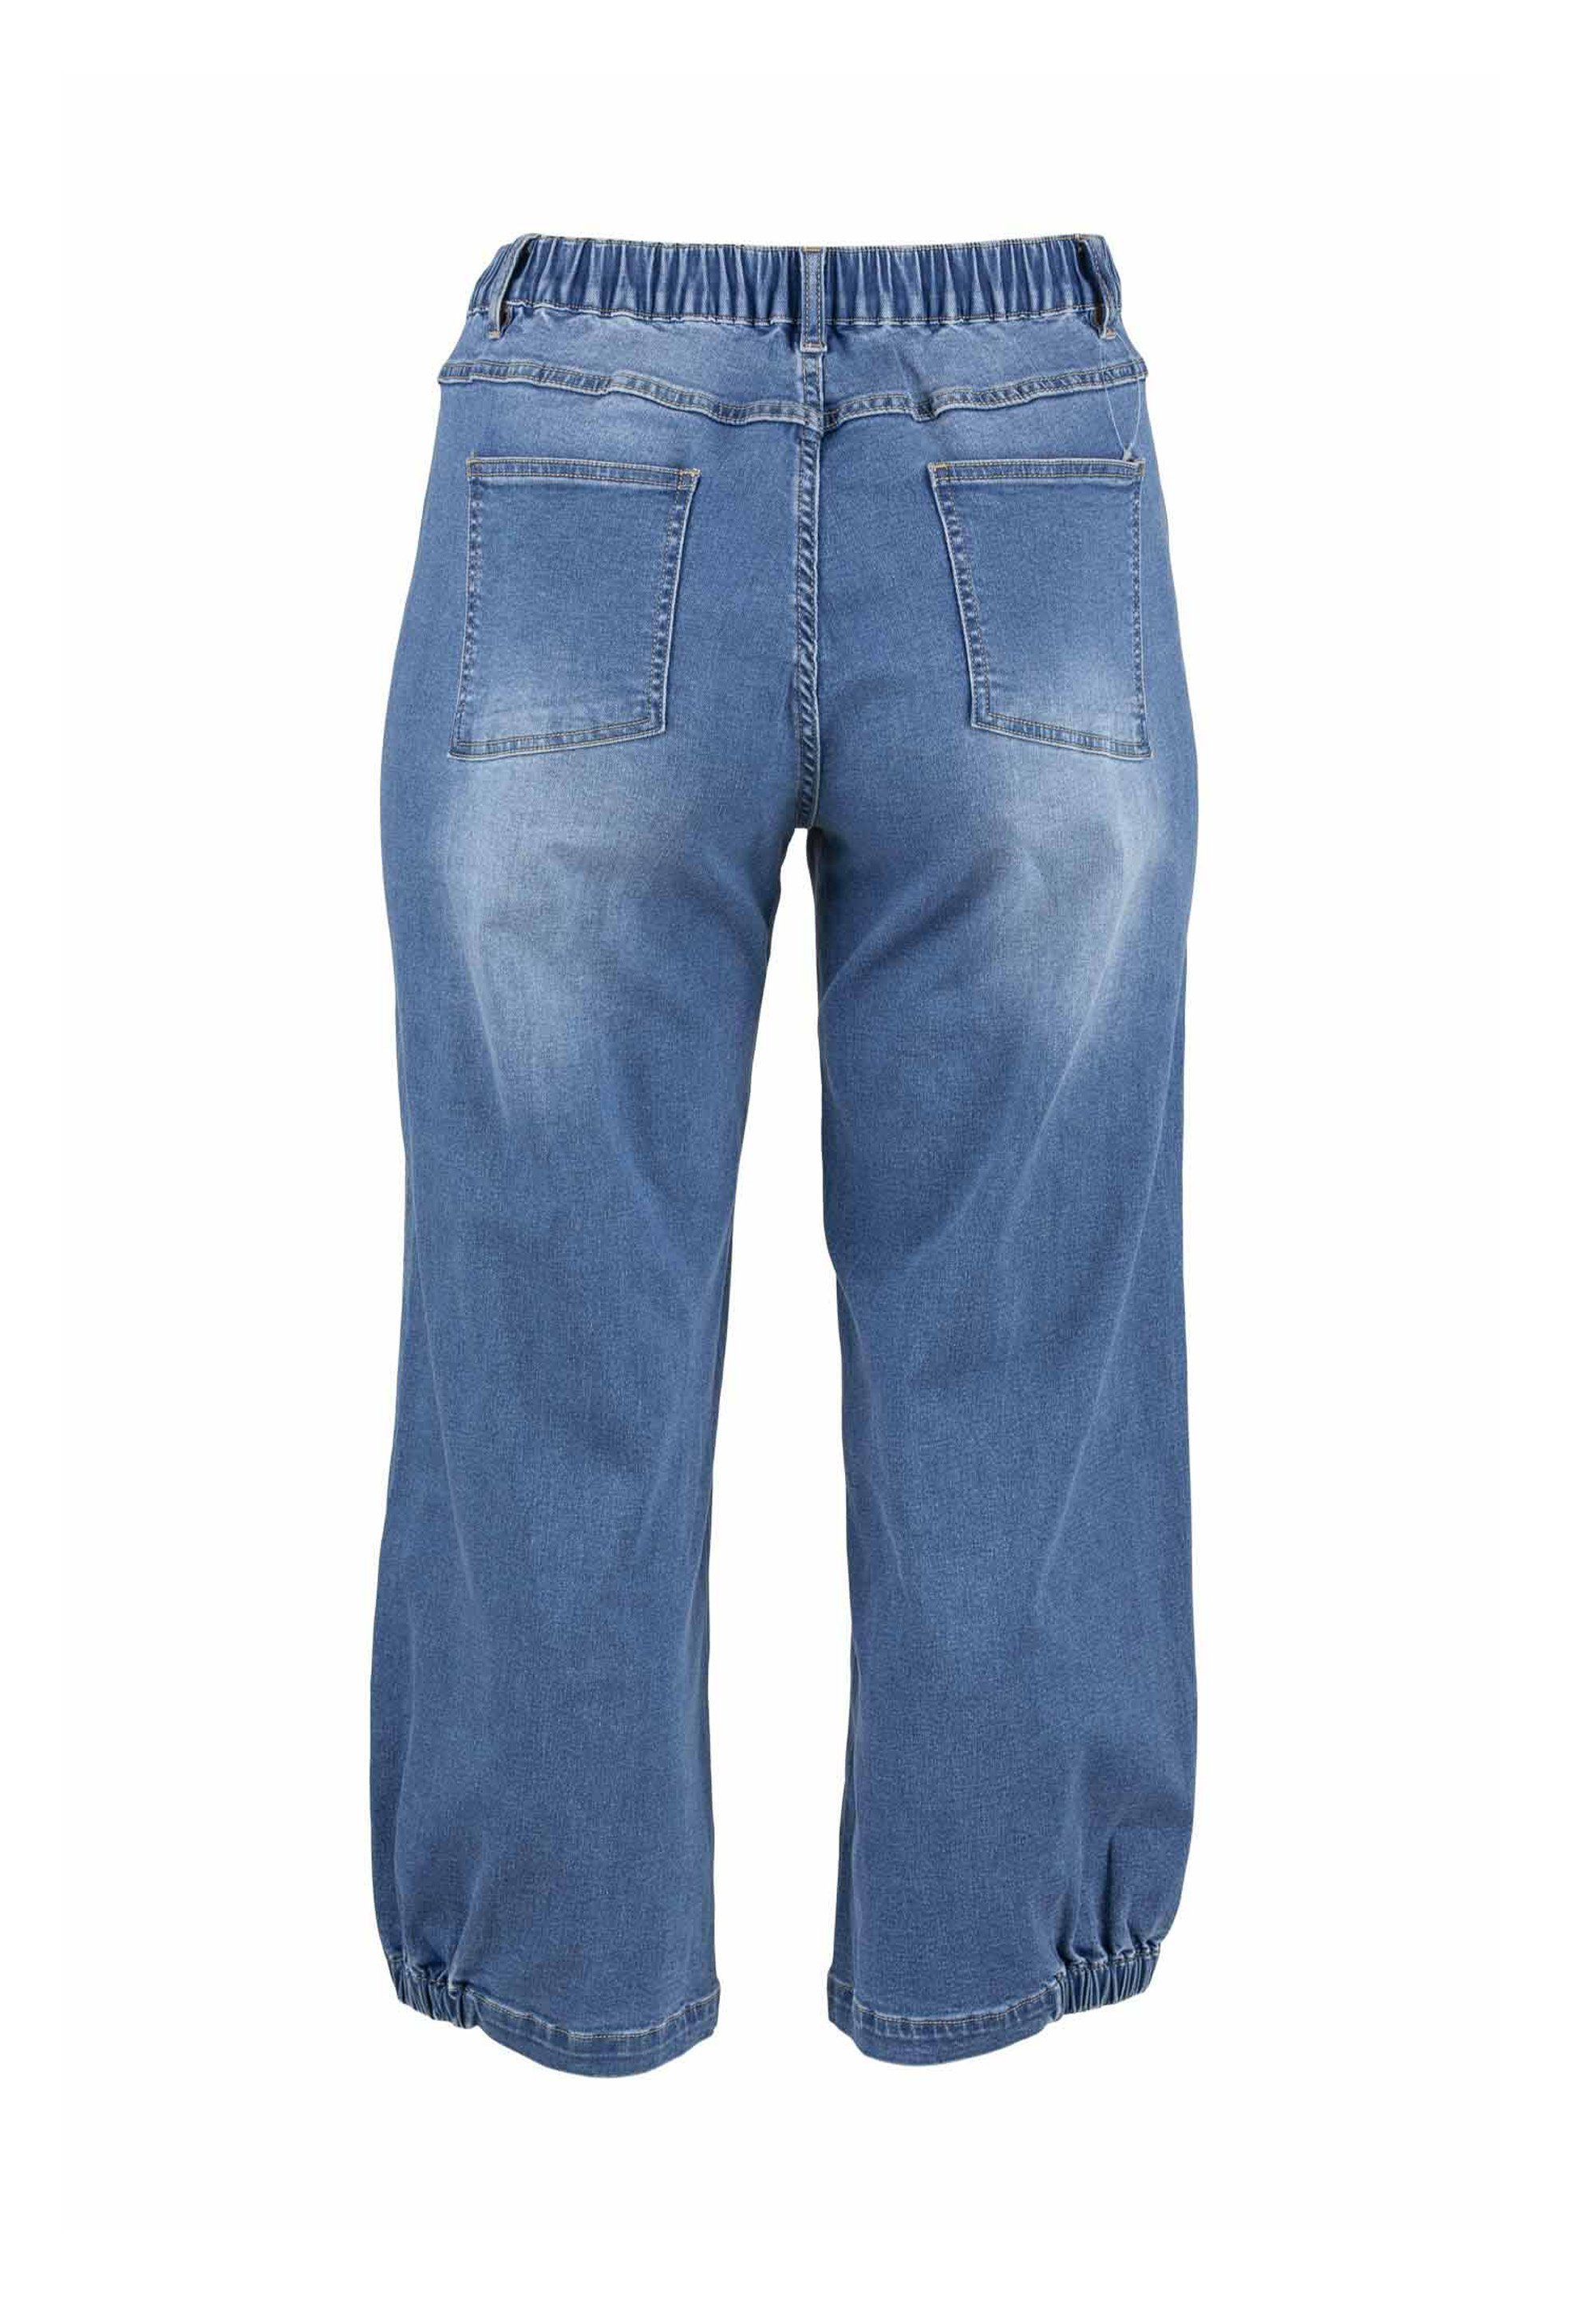 GOZZIP 3/4-Jeans Clara Light Danish blue denim design